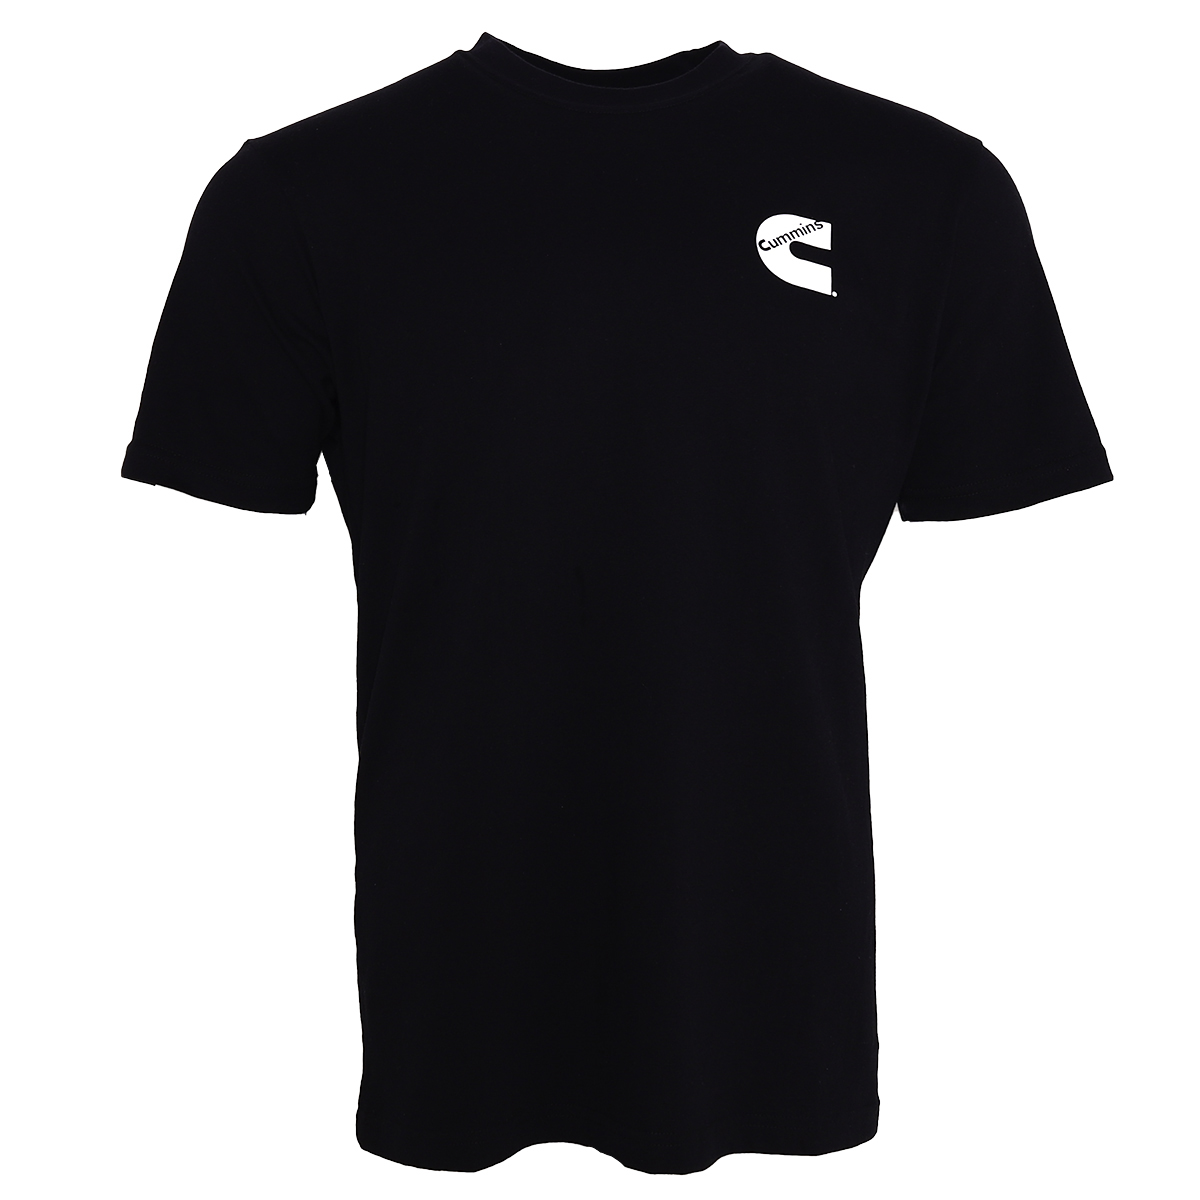 Cummins Unisex T-Shirt Short Sleeve Black Cotton Tagless Tee CMN4762 - XL